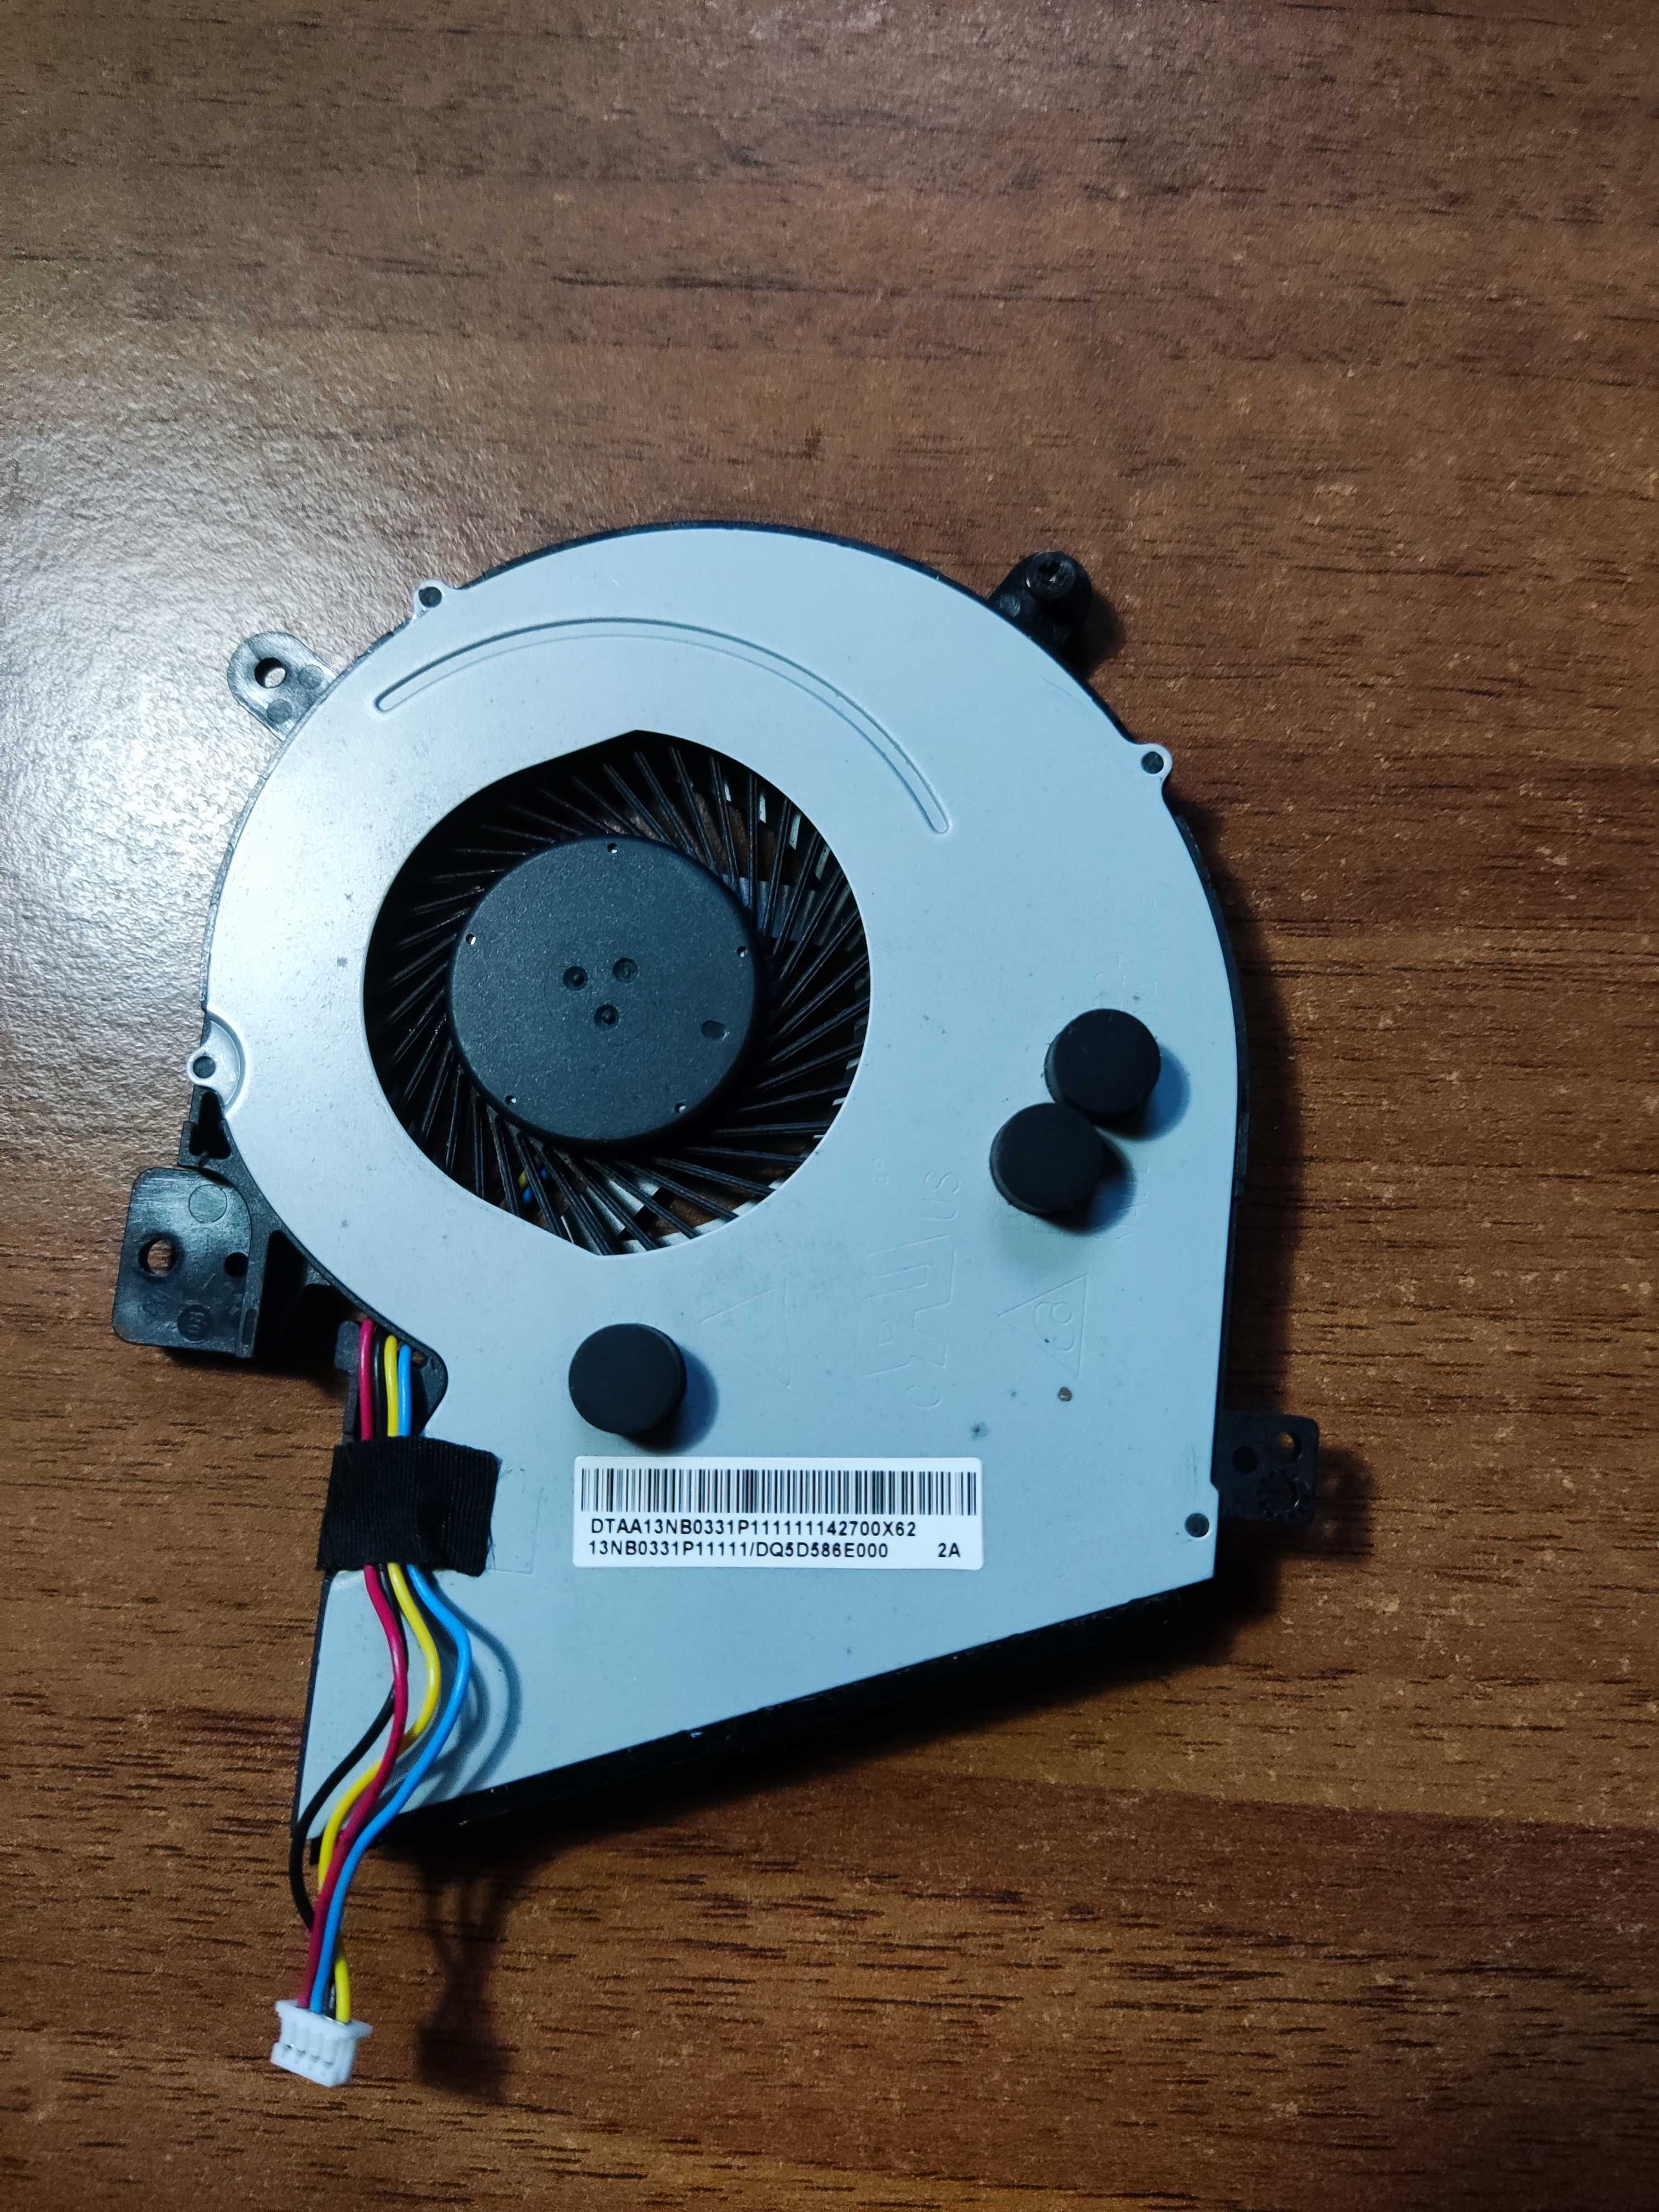 Asus CPU Cooling fan 13NB0331 + Speaker